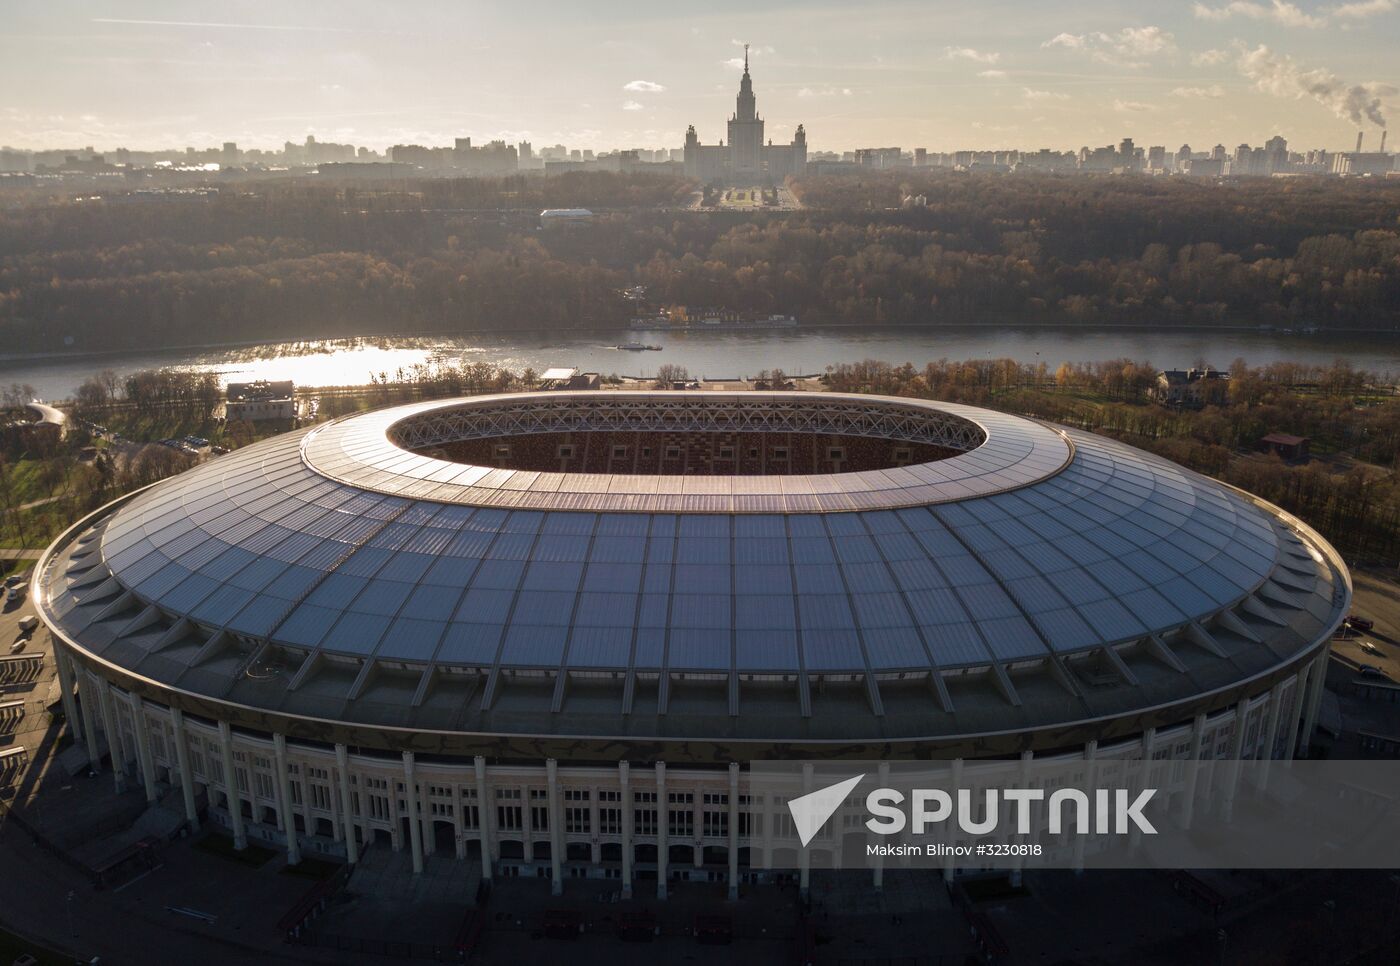 Luzhniki Stadium in Moscow